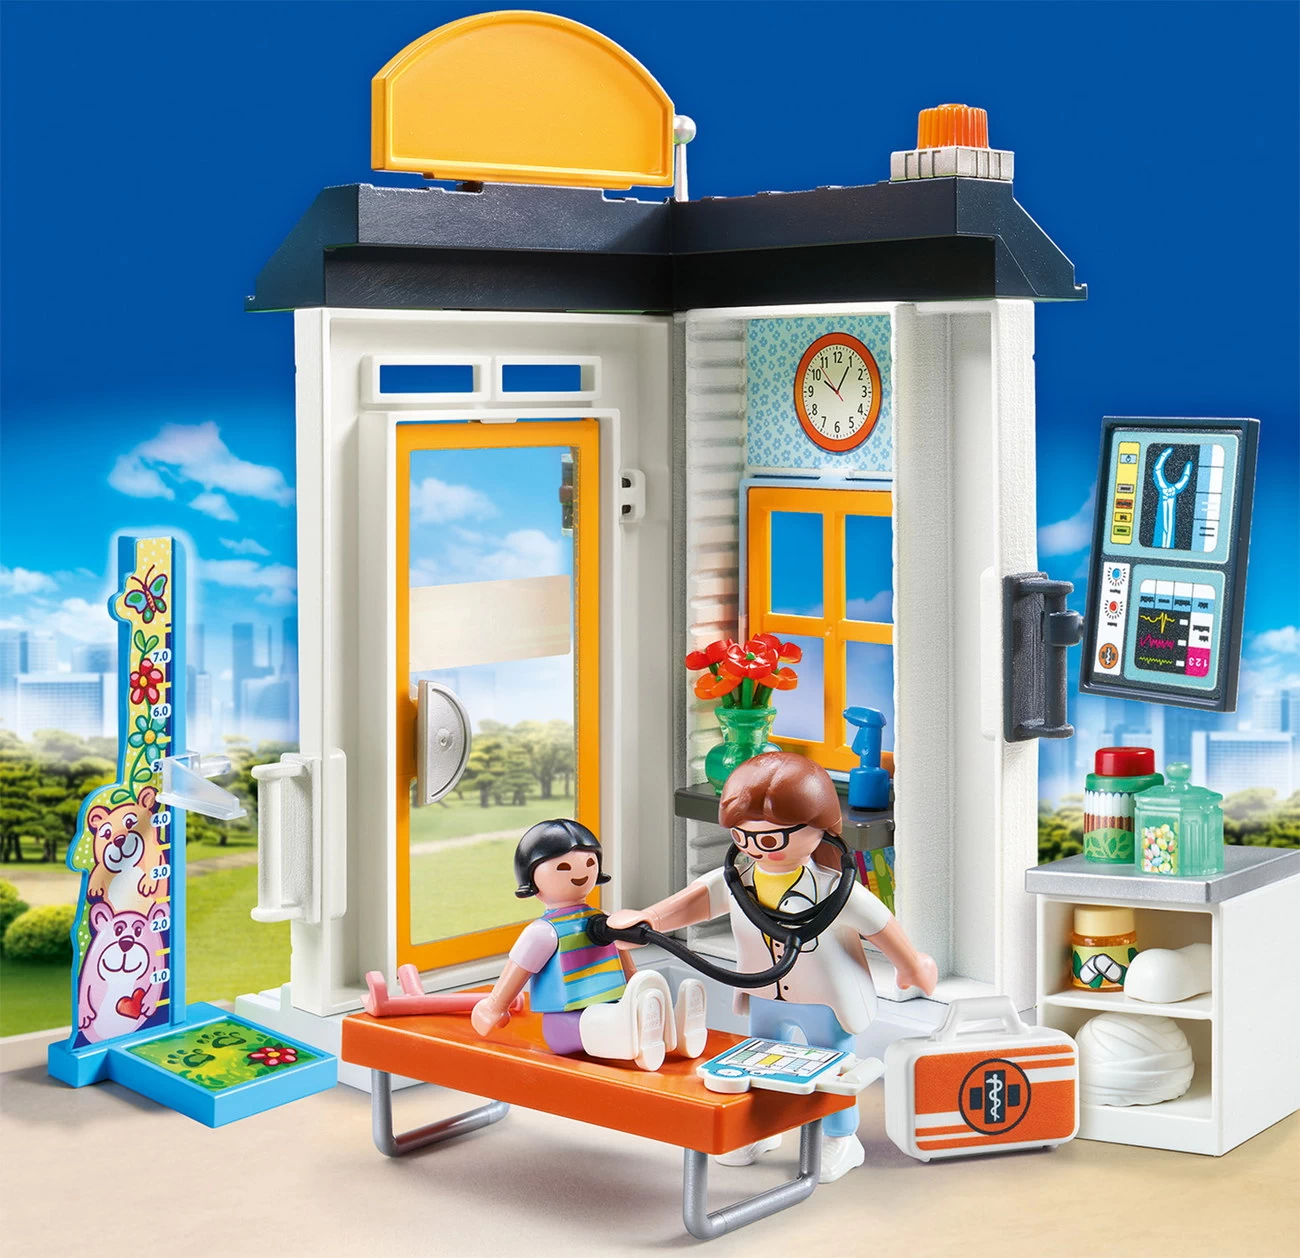 Playmobil 70818 - StarterPack Kinderärztin - City Life